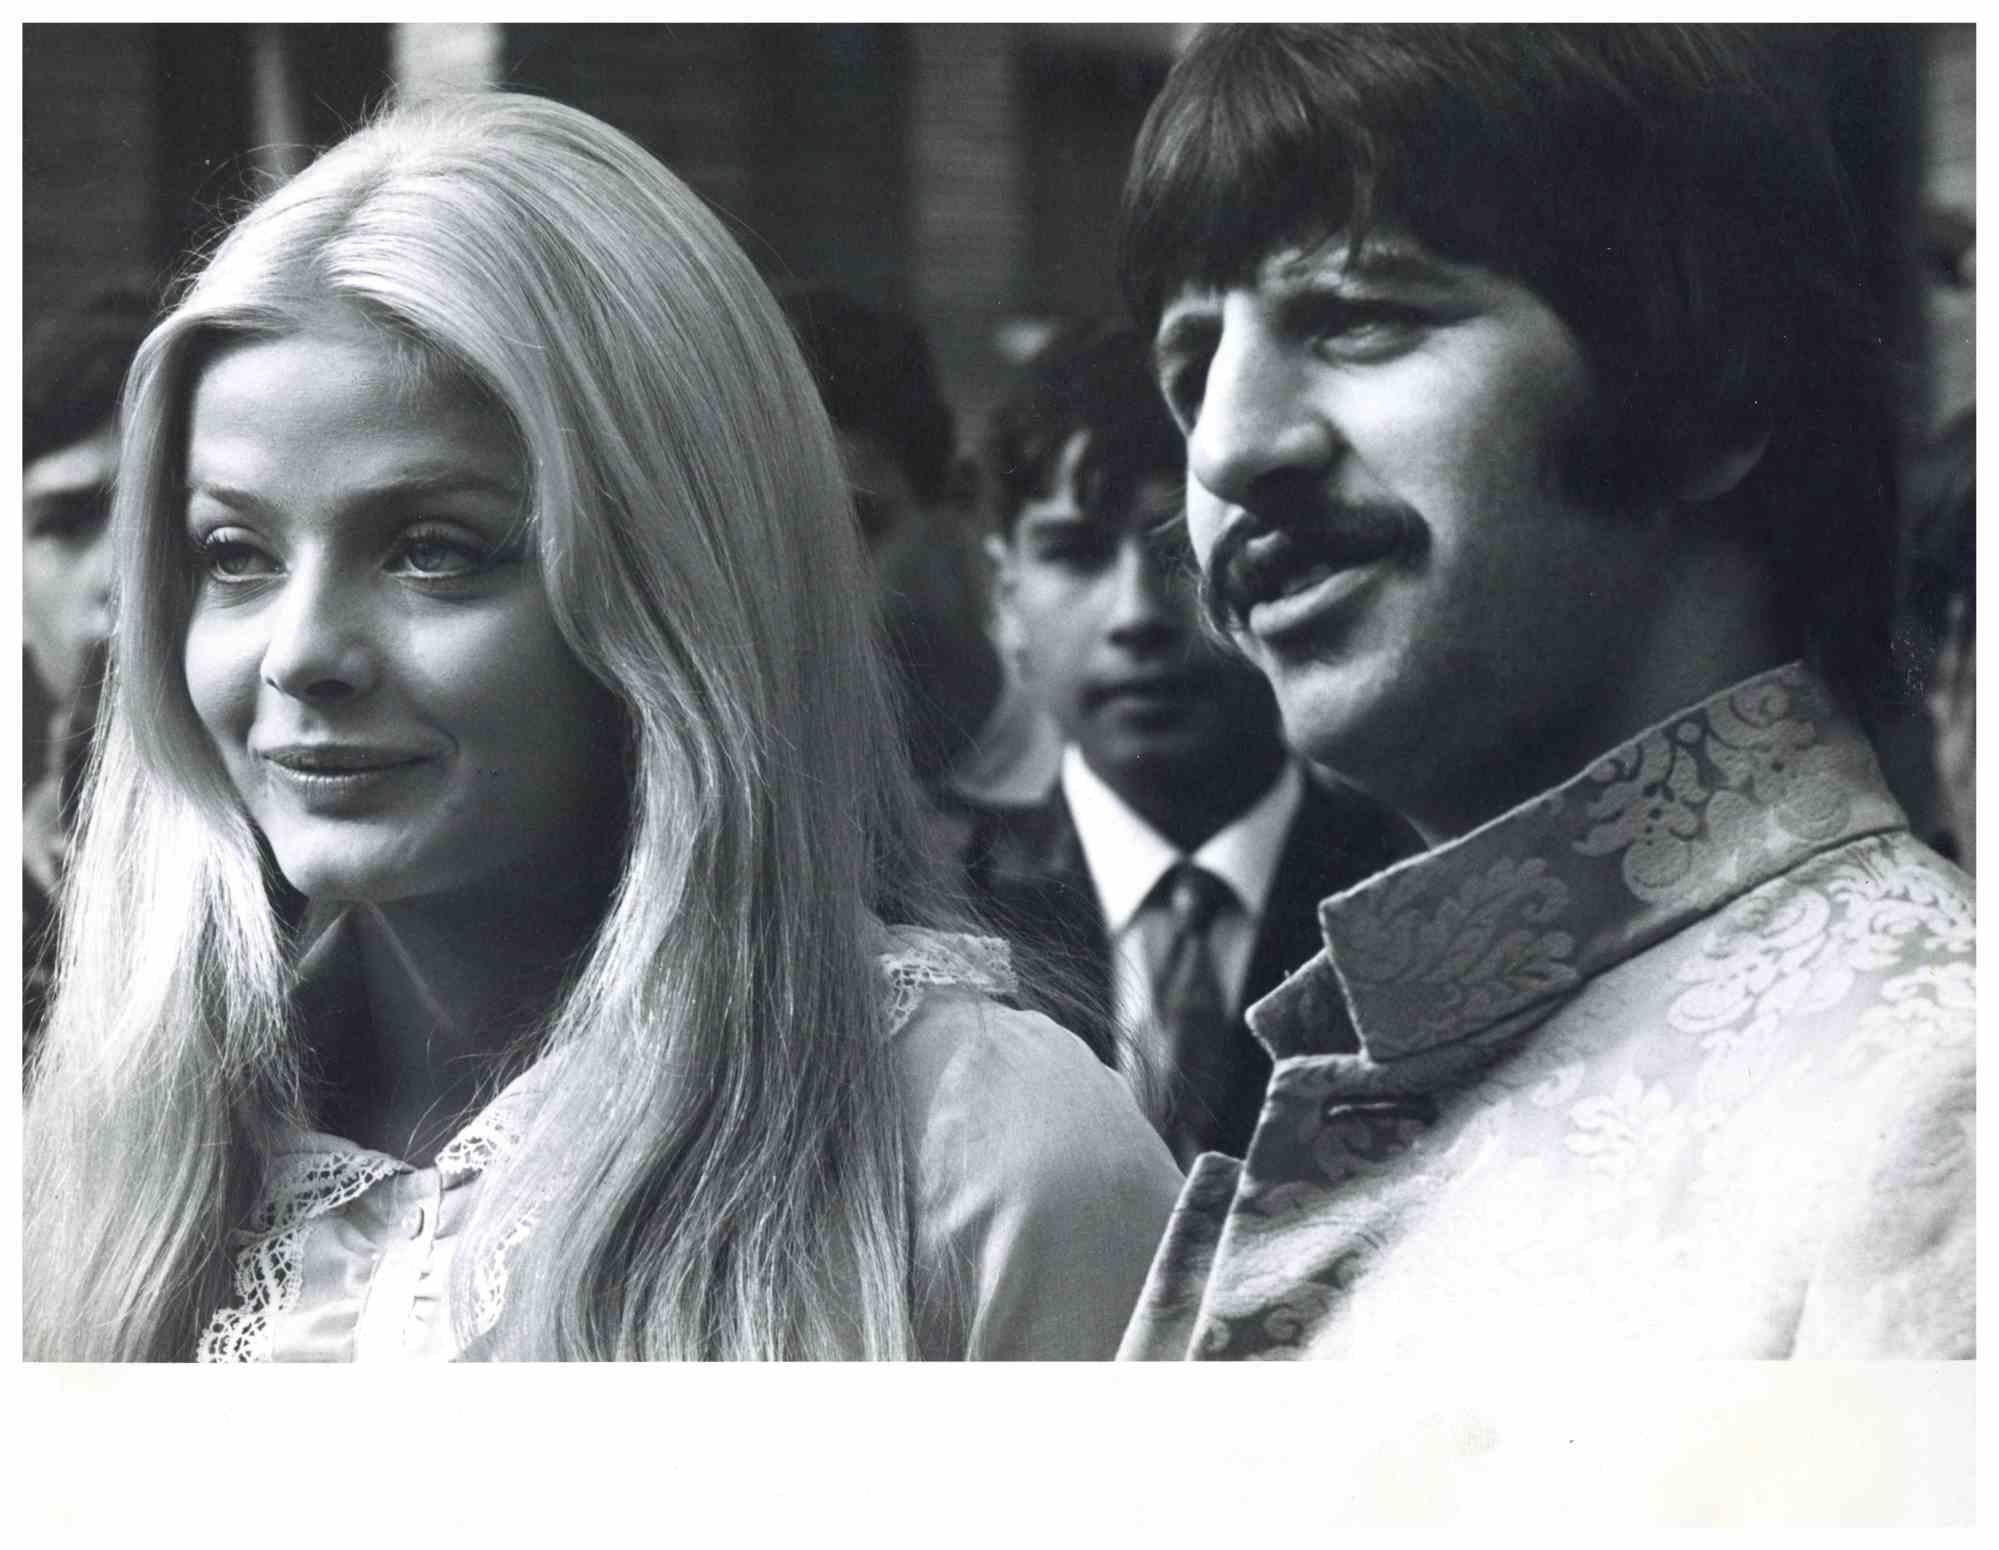 Unknown Portrait Photograph - Portrait of Ringo Starr and Ewa Aulin - Vintage Photograph - 1960s